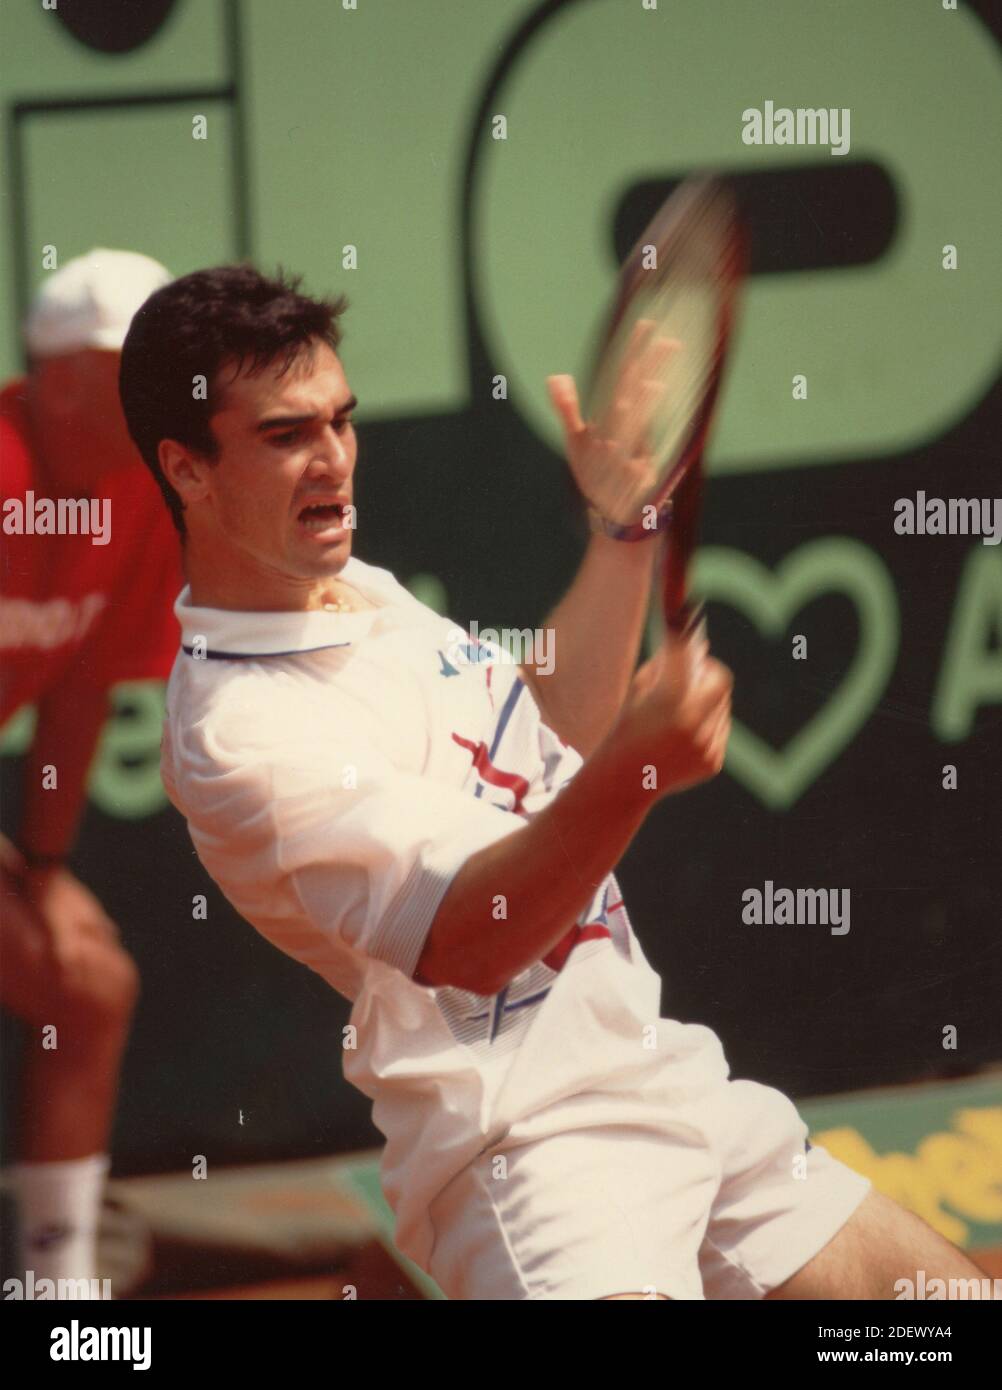 Spanish tennis player Alberto Berasategui, 1995 Stock Photo - Alamy